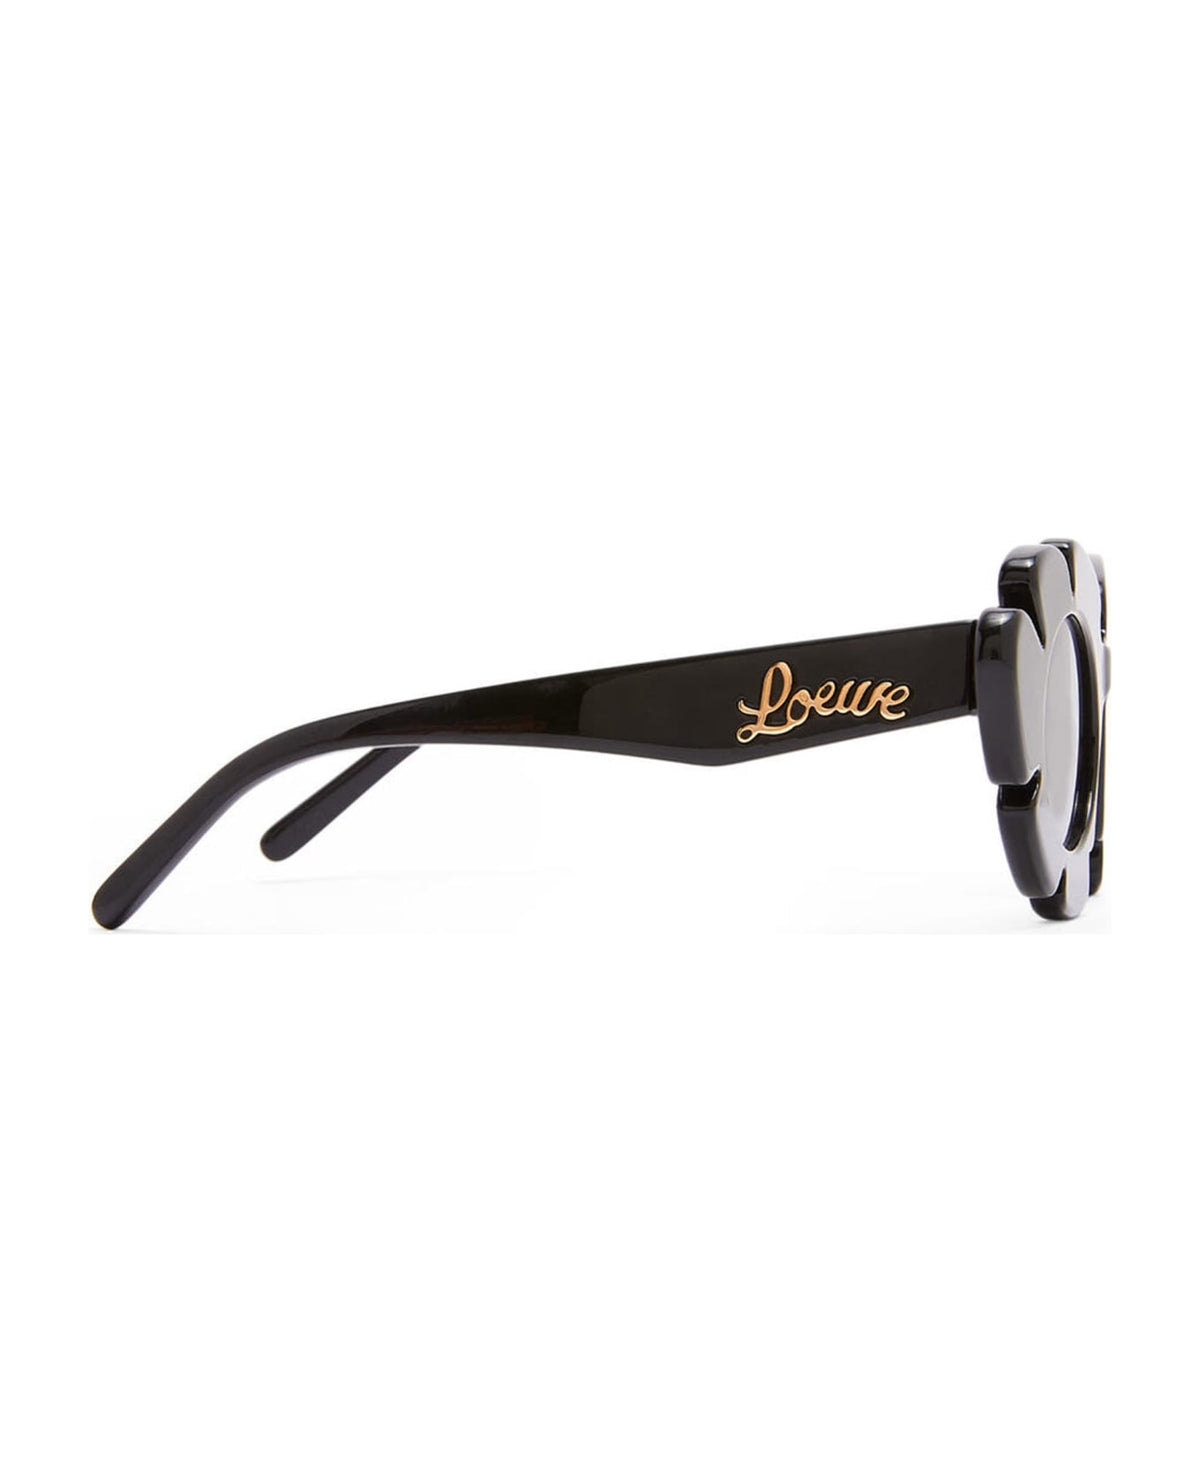 Lw40088u - Black Sunglasses